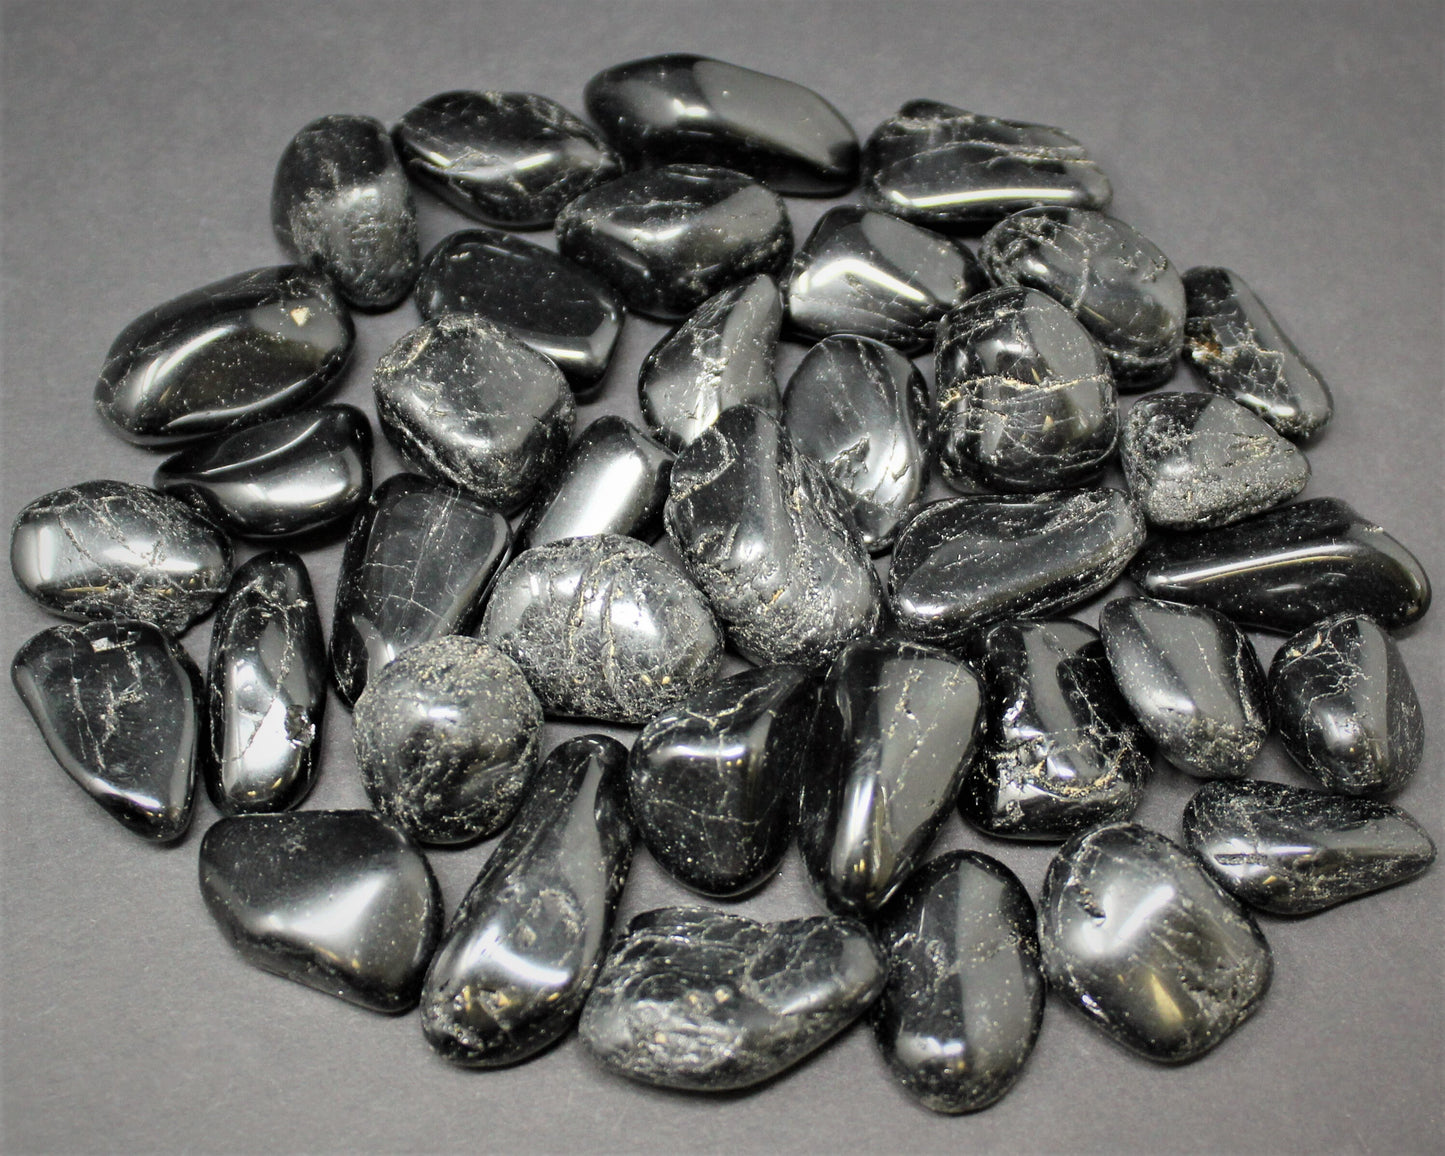 6 Small Tourmaline Grounding Crystals Stones